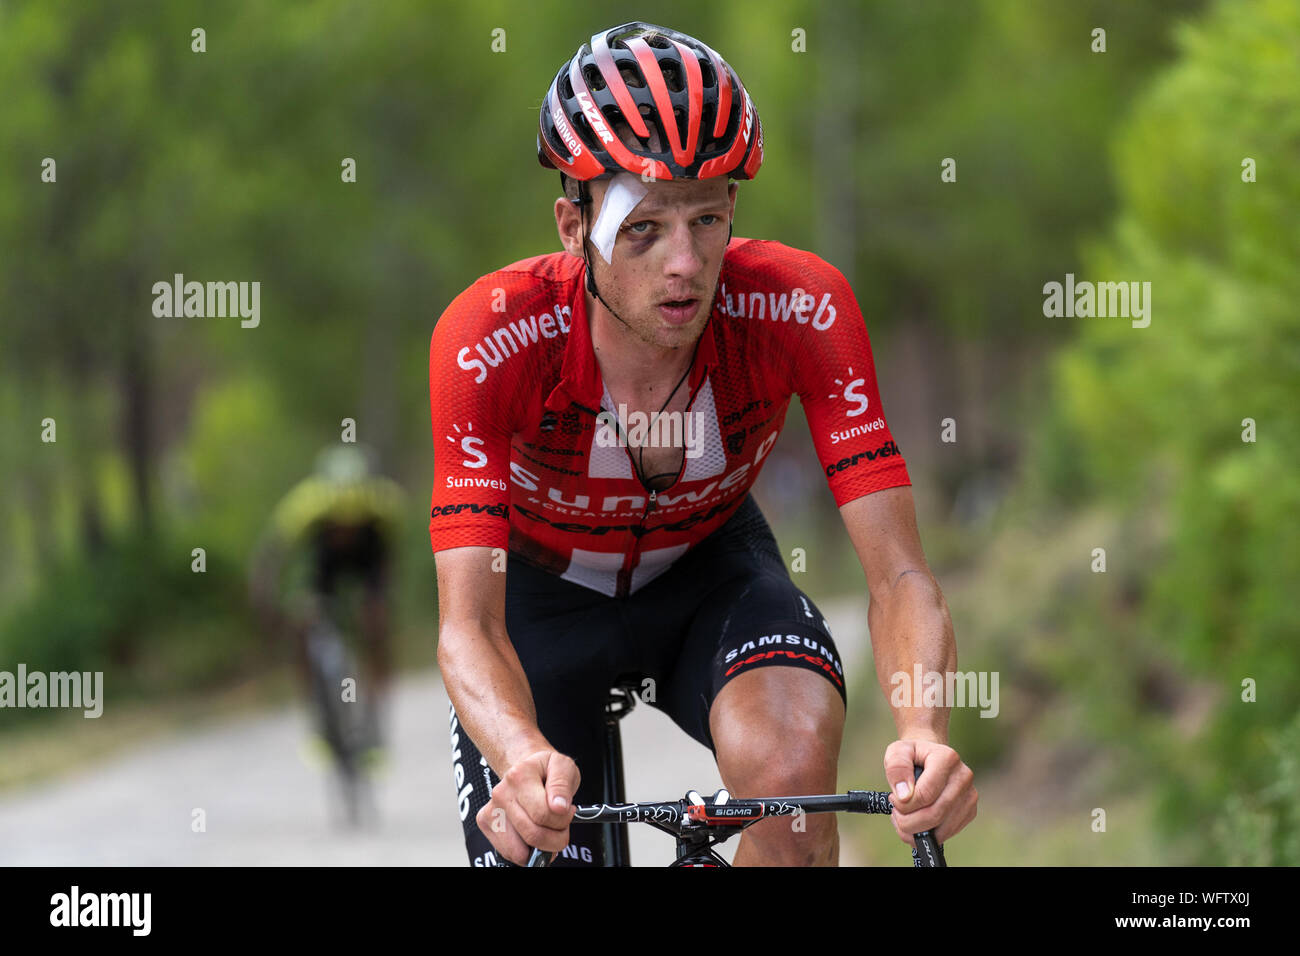 30 augustus 2019 Mas de la Costa, Spagna Ciclismo Vuelta 2019 30-08-2019: Ronde van Spanje: Onda: Mas de la Costa fase 7, Sunweb team, Vuelta a Espana 2019, Martijn Tusveld Foto Stock